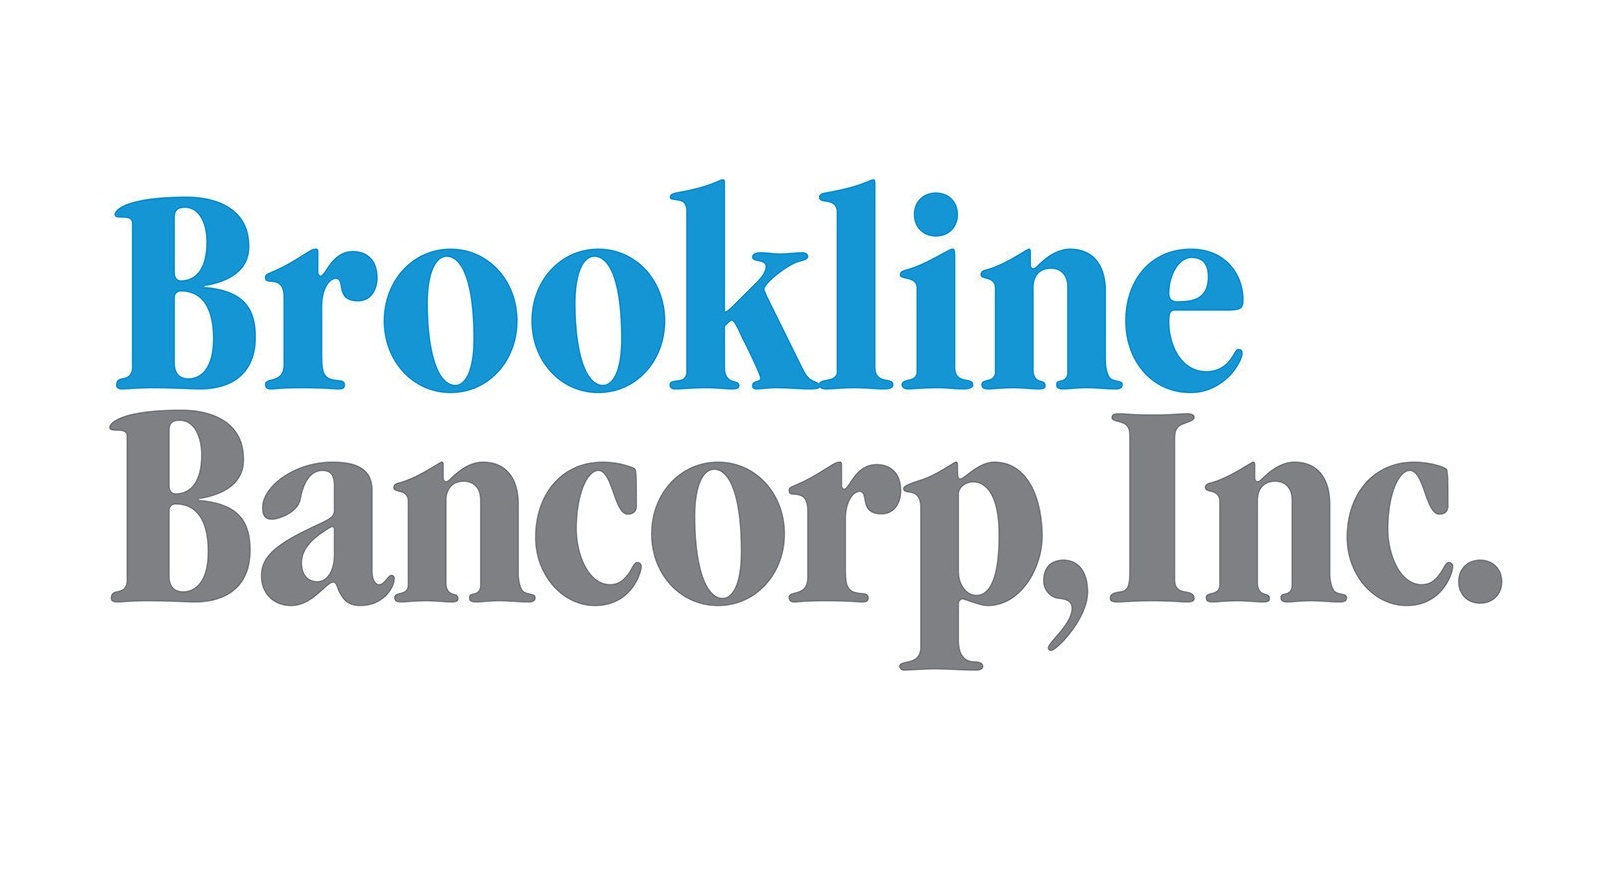 Brookline Bancorp